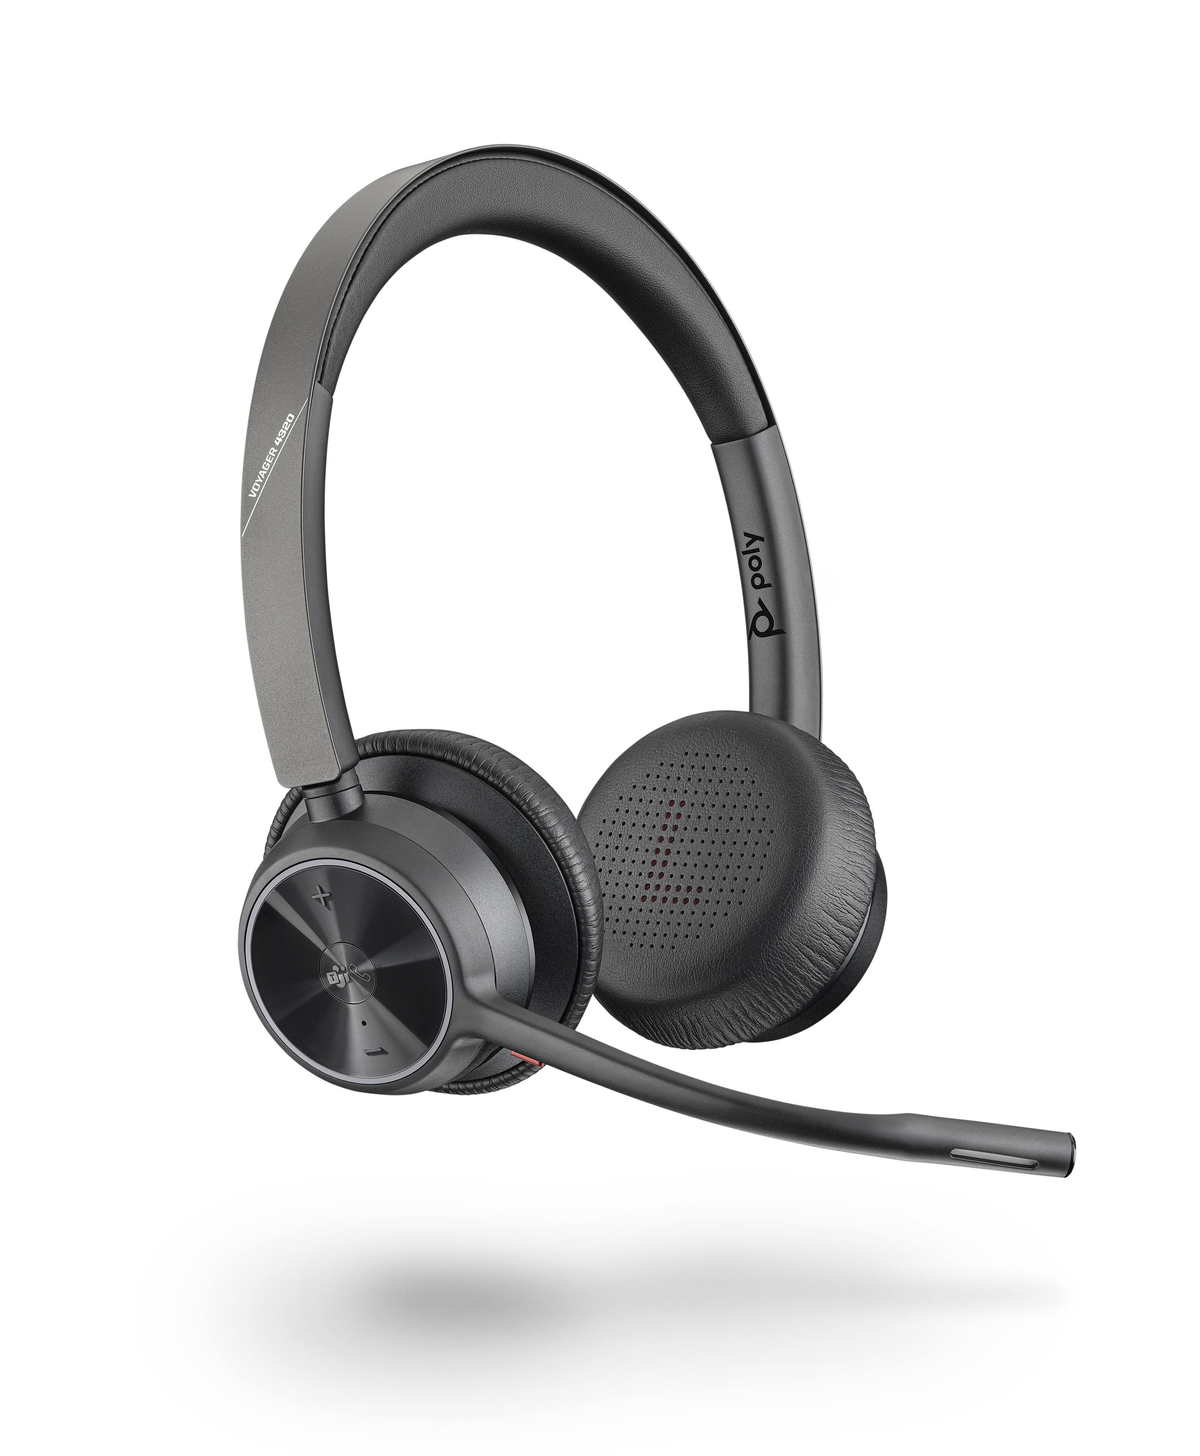 POLY Voyager On-ear kopfhörer Bluetooth 4320, Schwarz Bluetooth